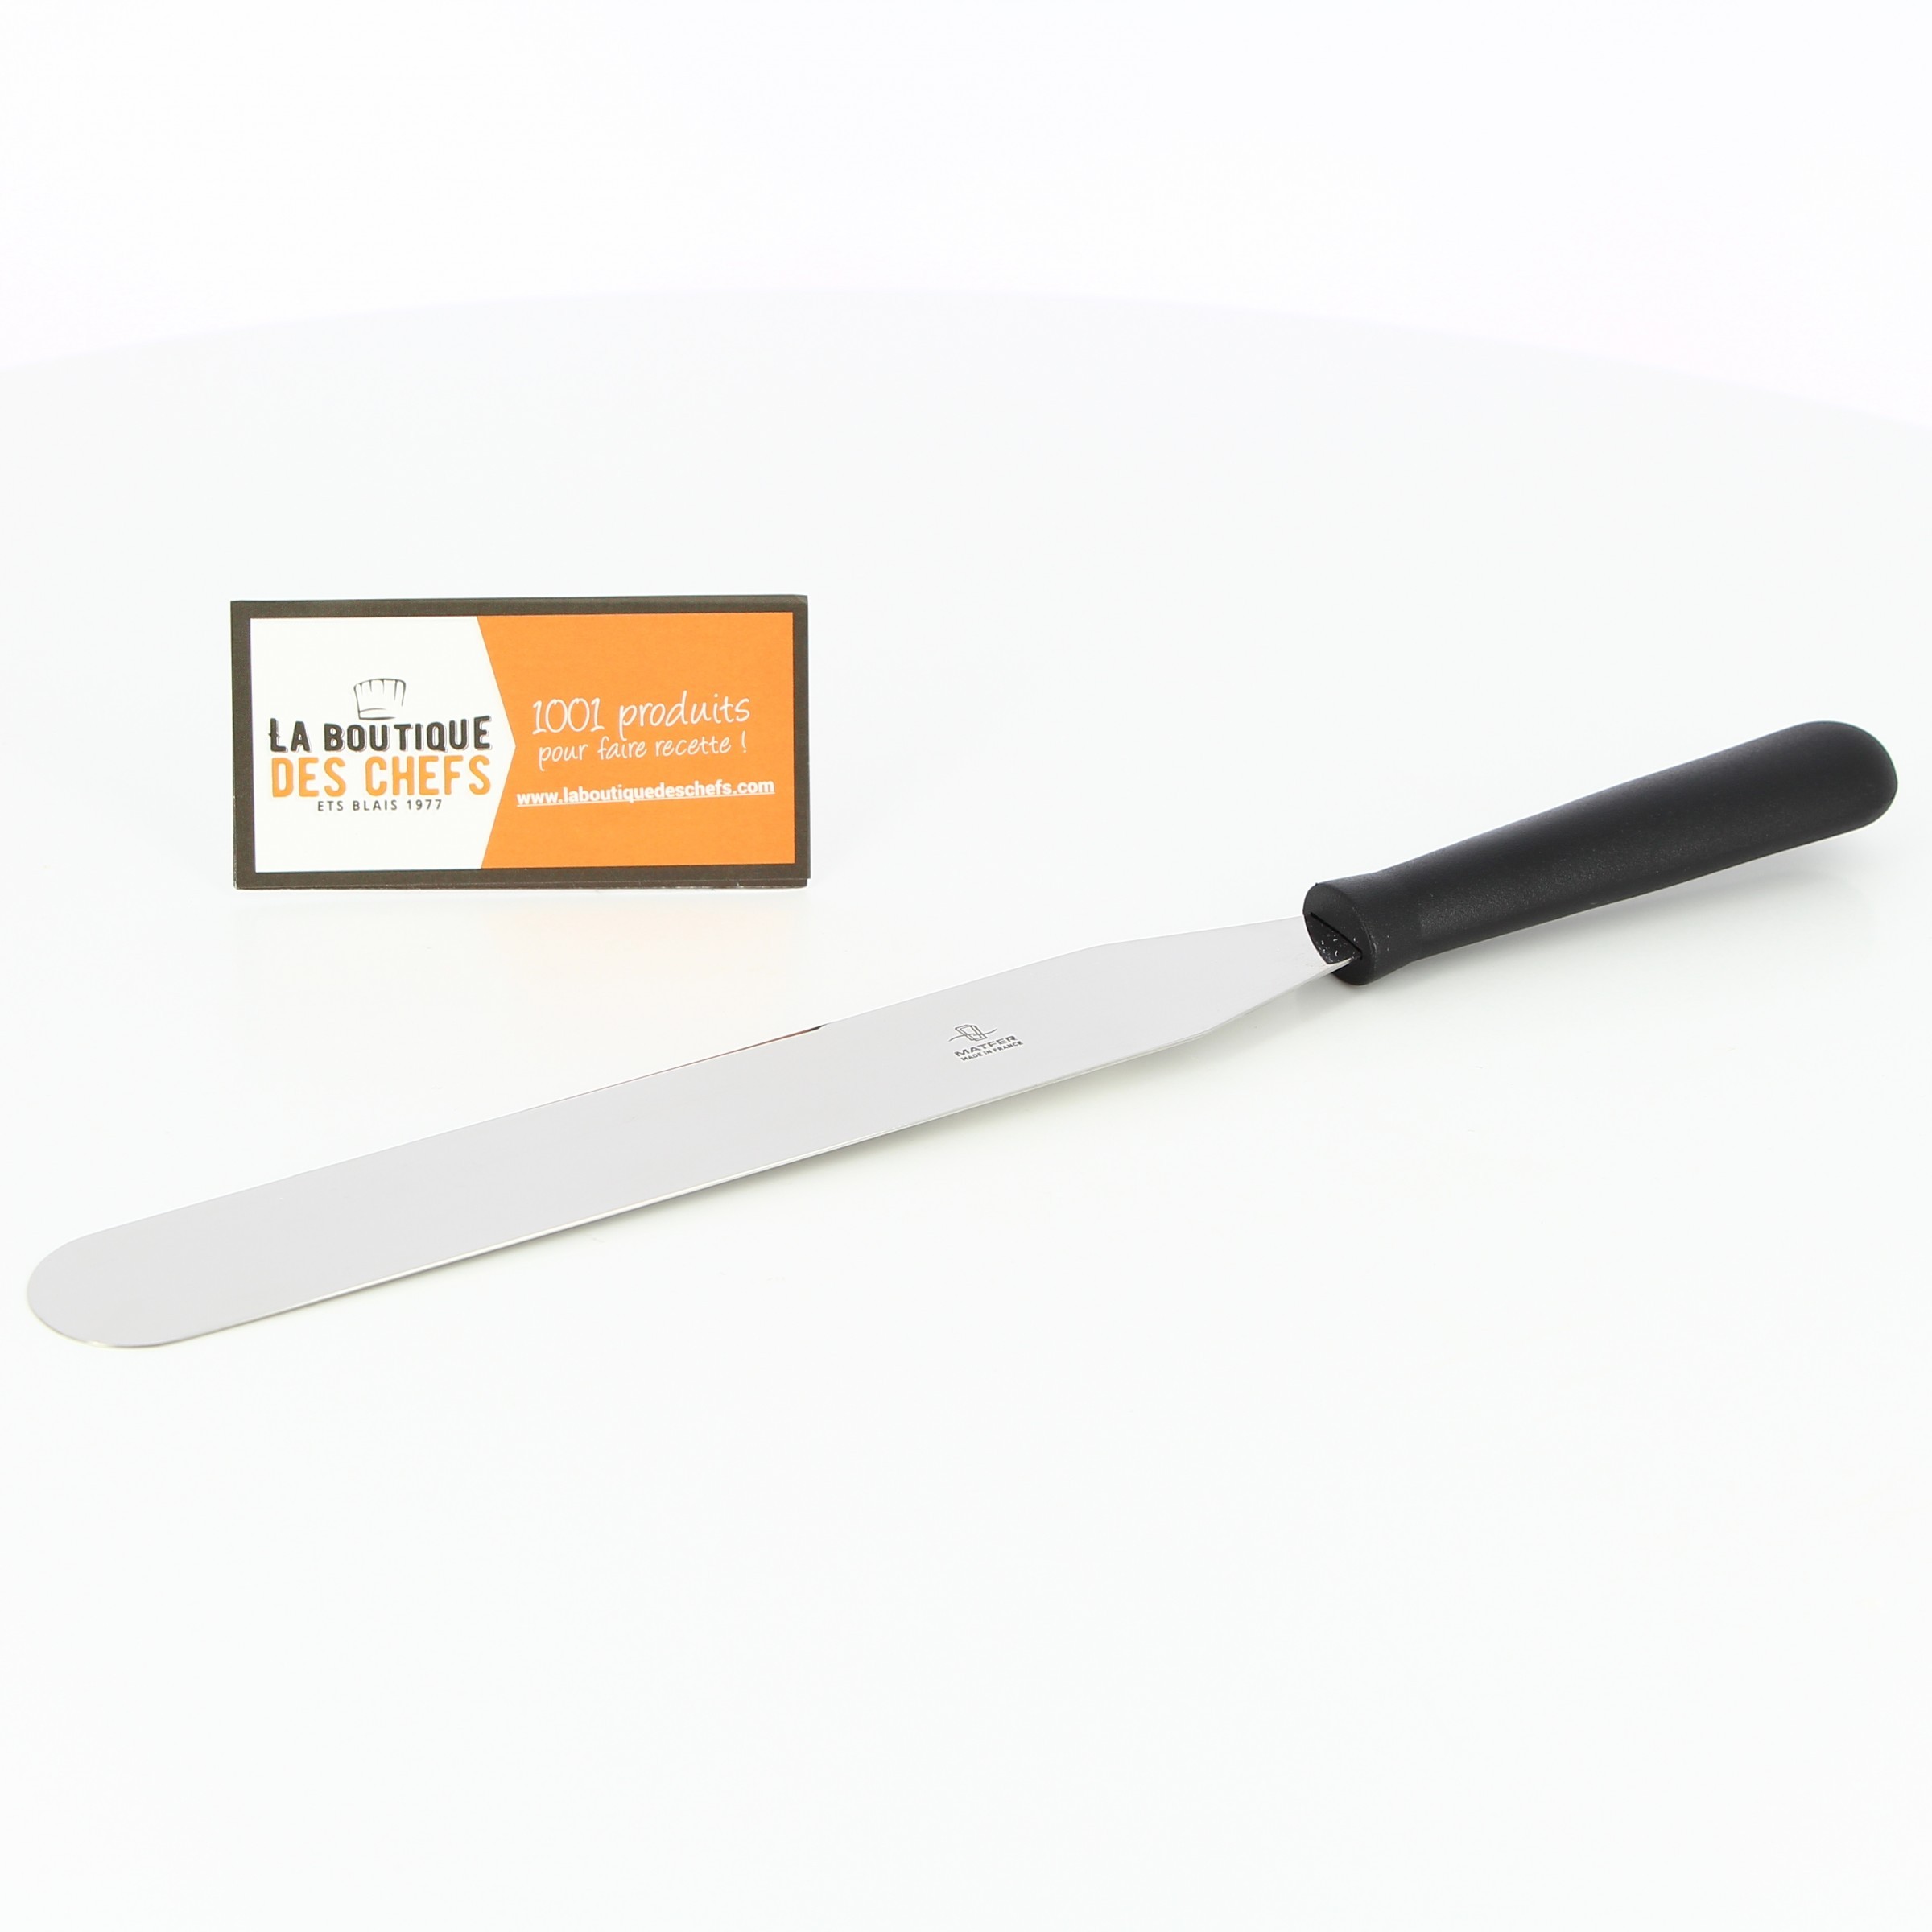 Palette ou spatule plate massive de cuisine en inox Matfer